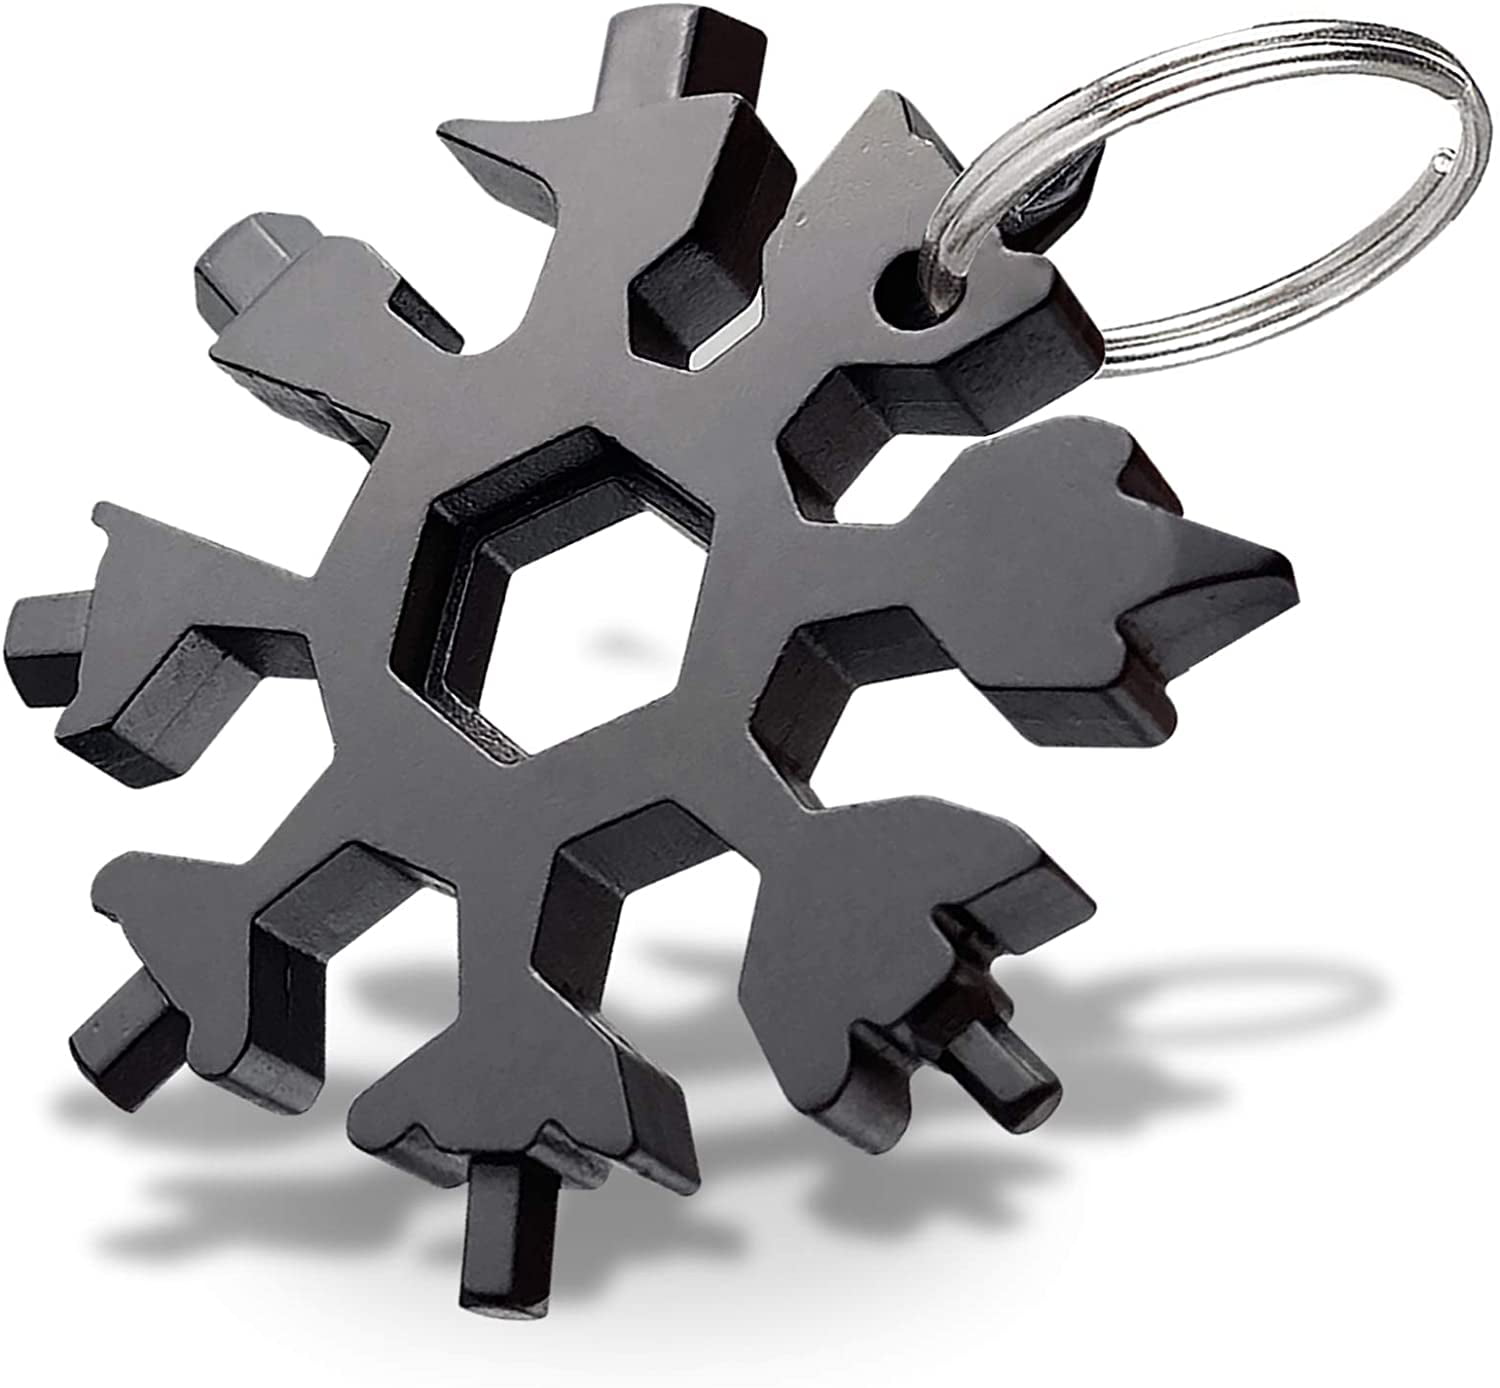 18 In 1 Snowflake Tool Multi Tool Portable Key-Chain Screwdriver Black or chrome 